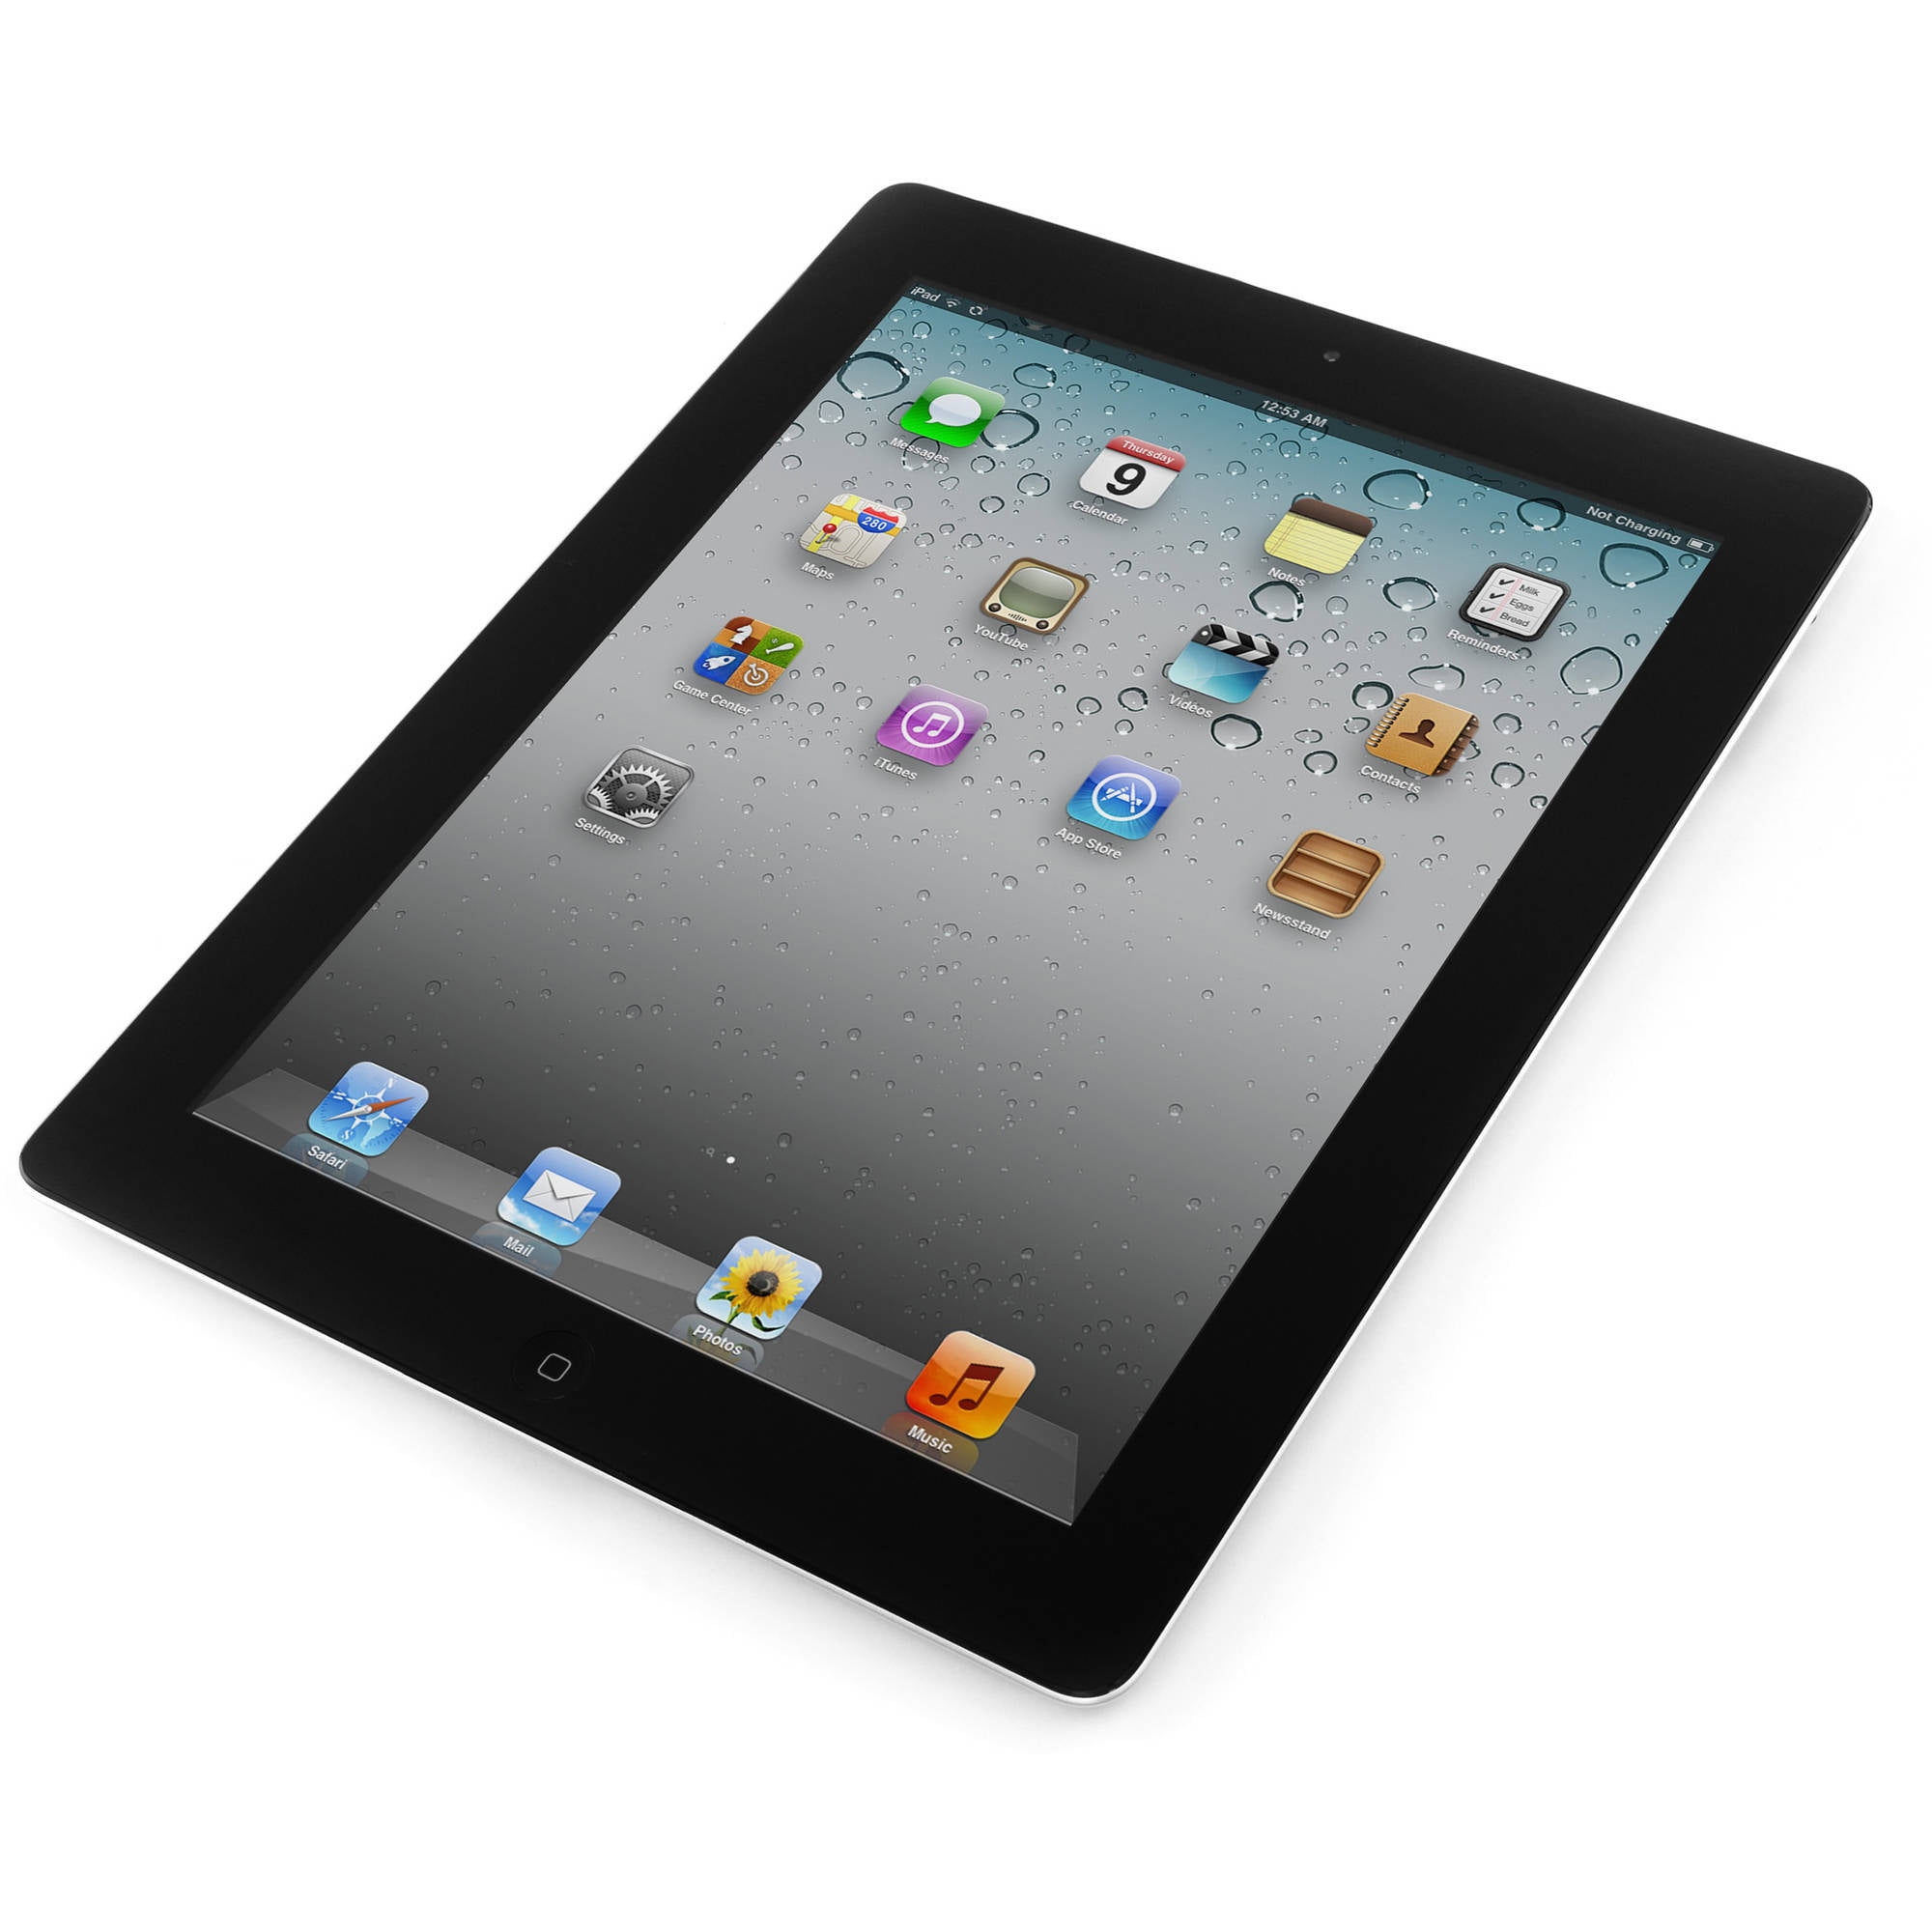 iPad reacondicionado - Apple iPad 4 16 Gb. Blanco (Wi-Fi+Celular) 9.7'', Reacondicionado, A6 1GHz, 1 GB RAM